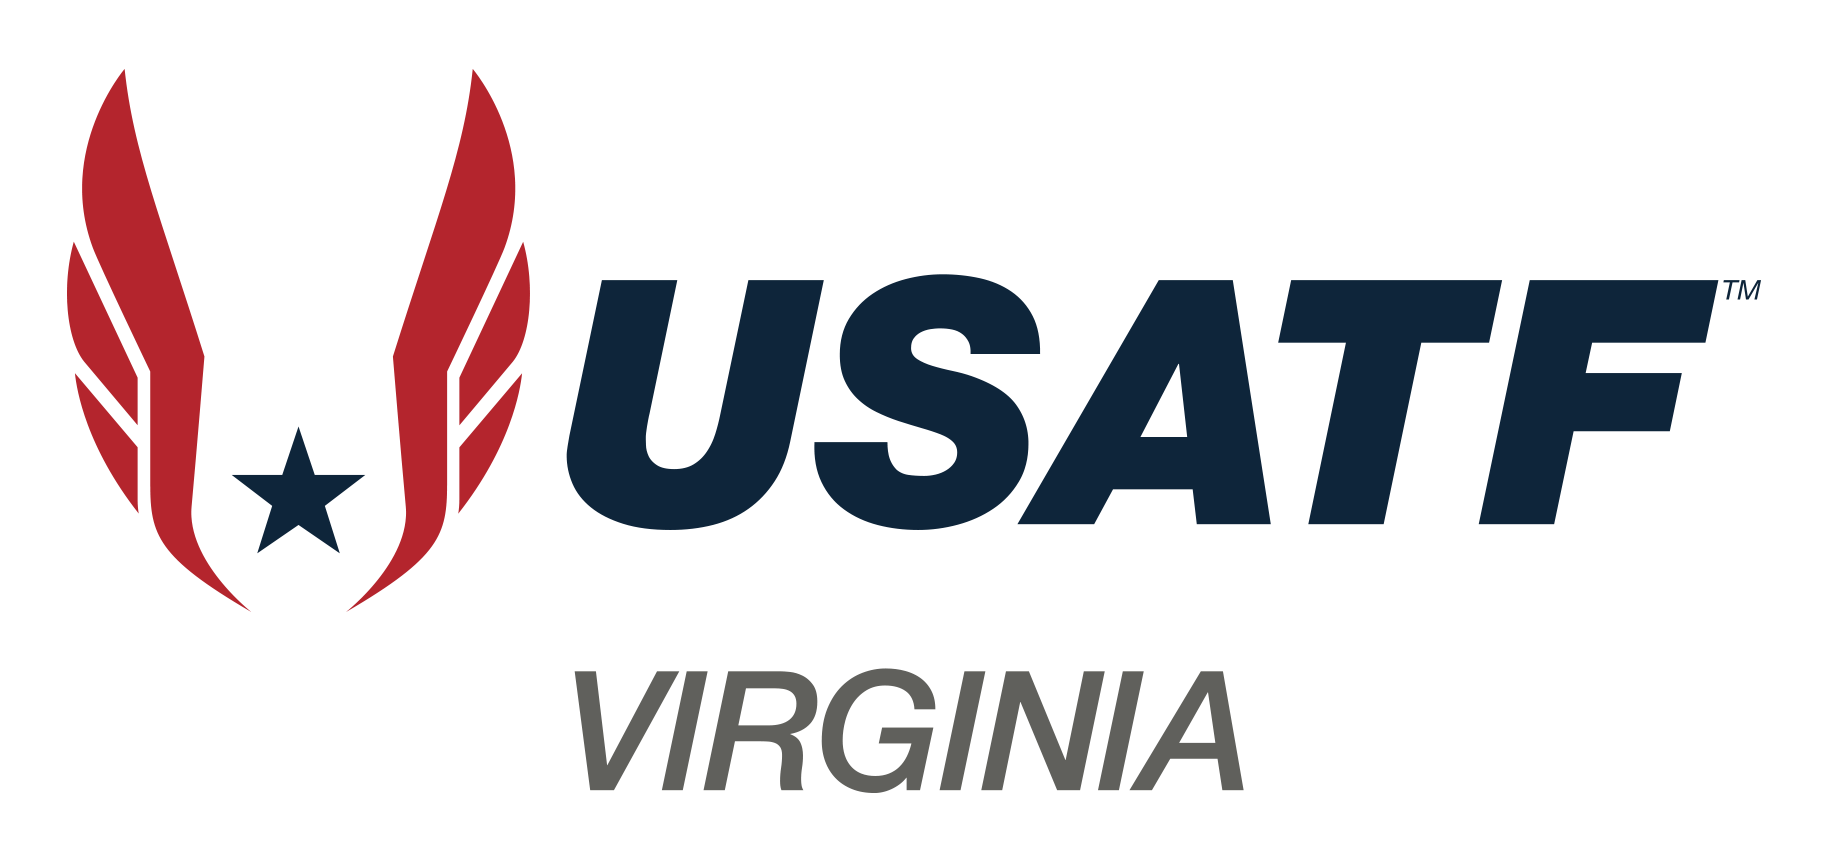 2023 USATF Virginia Fall Distance Running Grand Prix